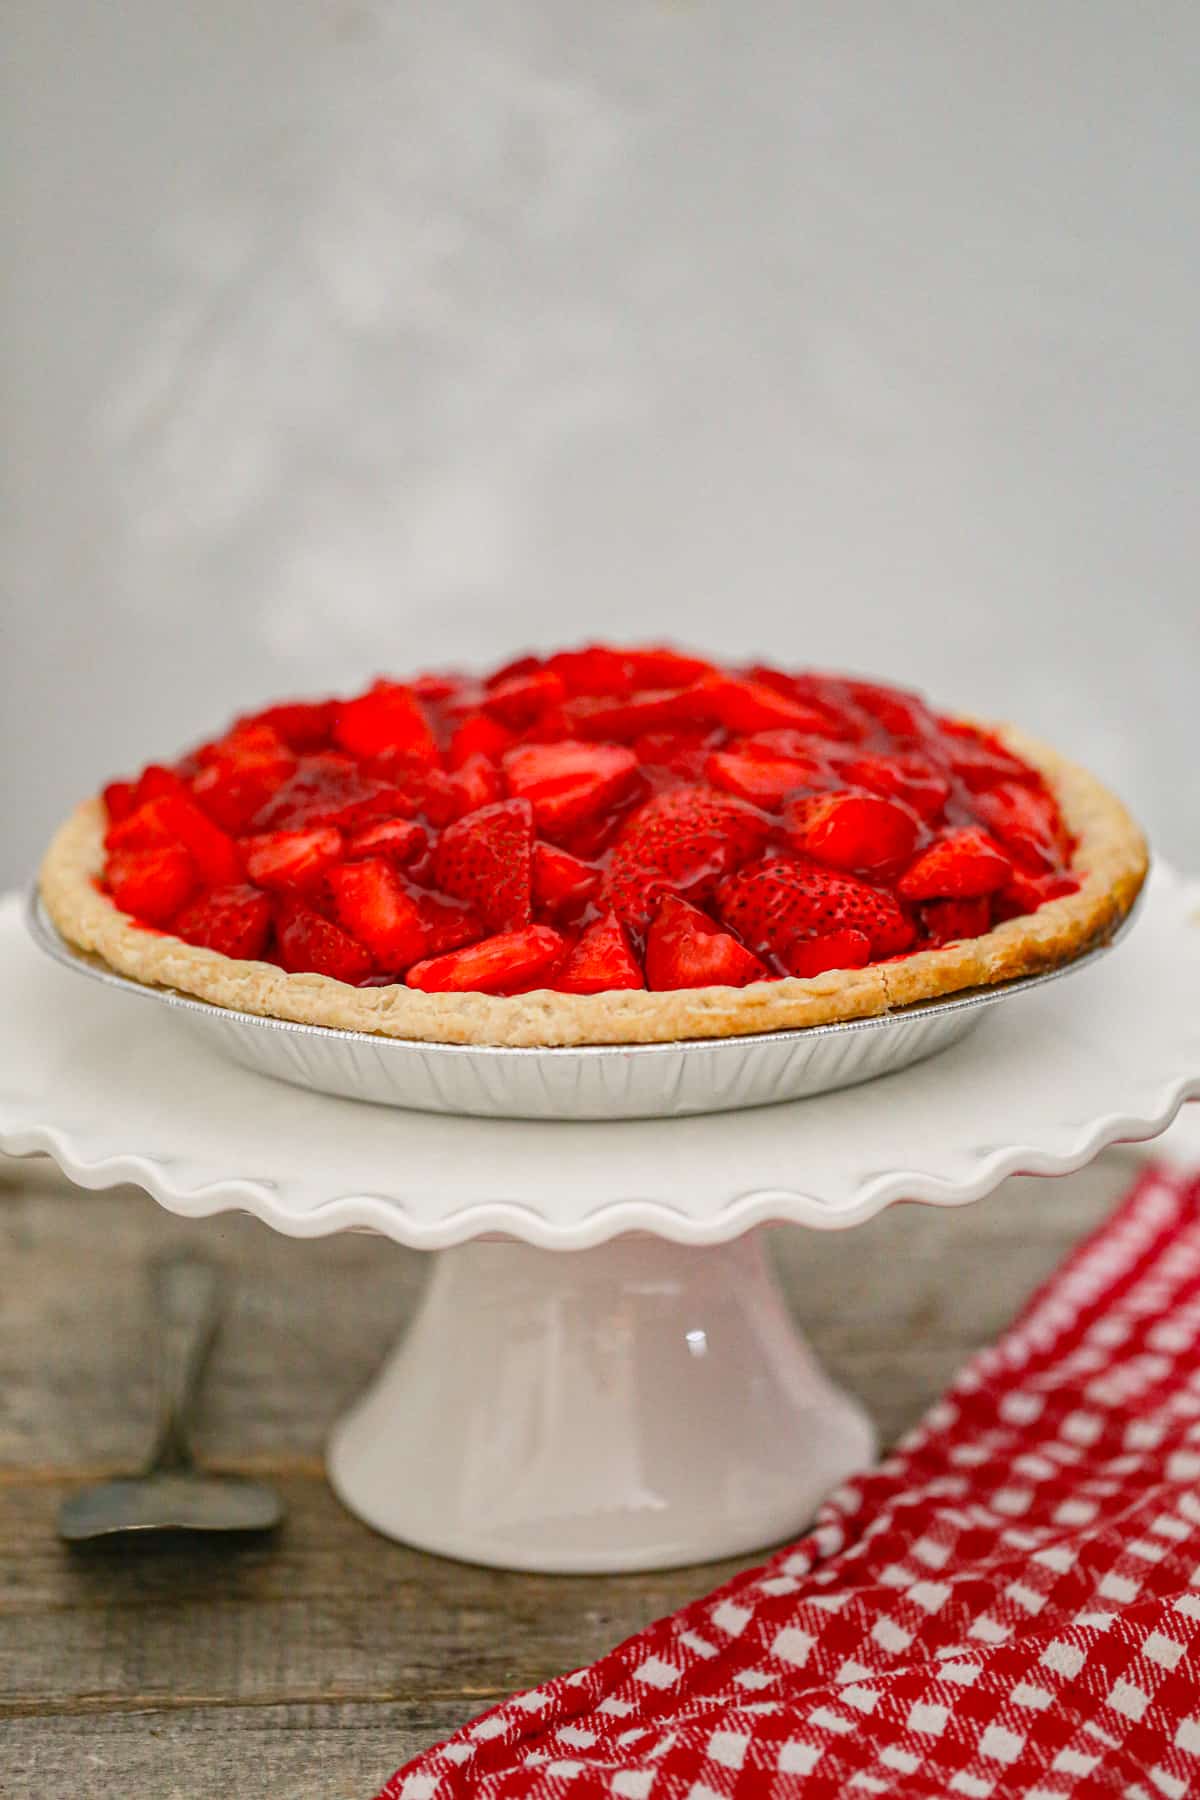 Original Copycat Shoney’s Strawberry Pie - The Baking ChocolaTess